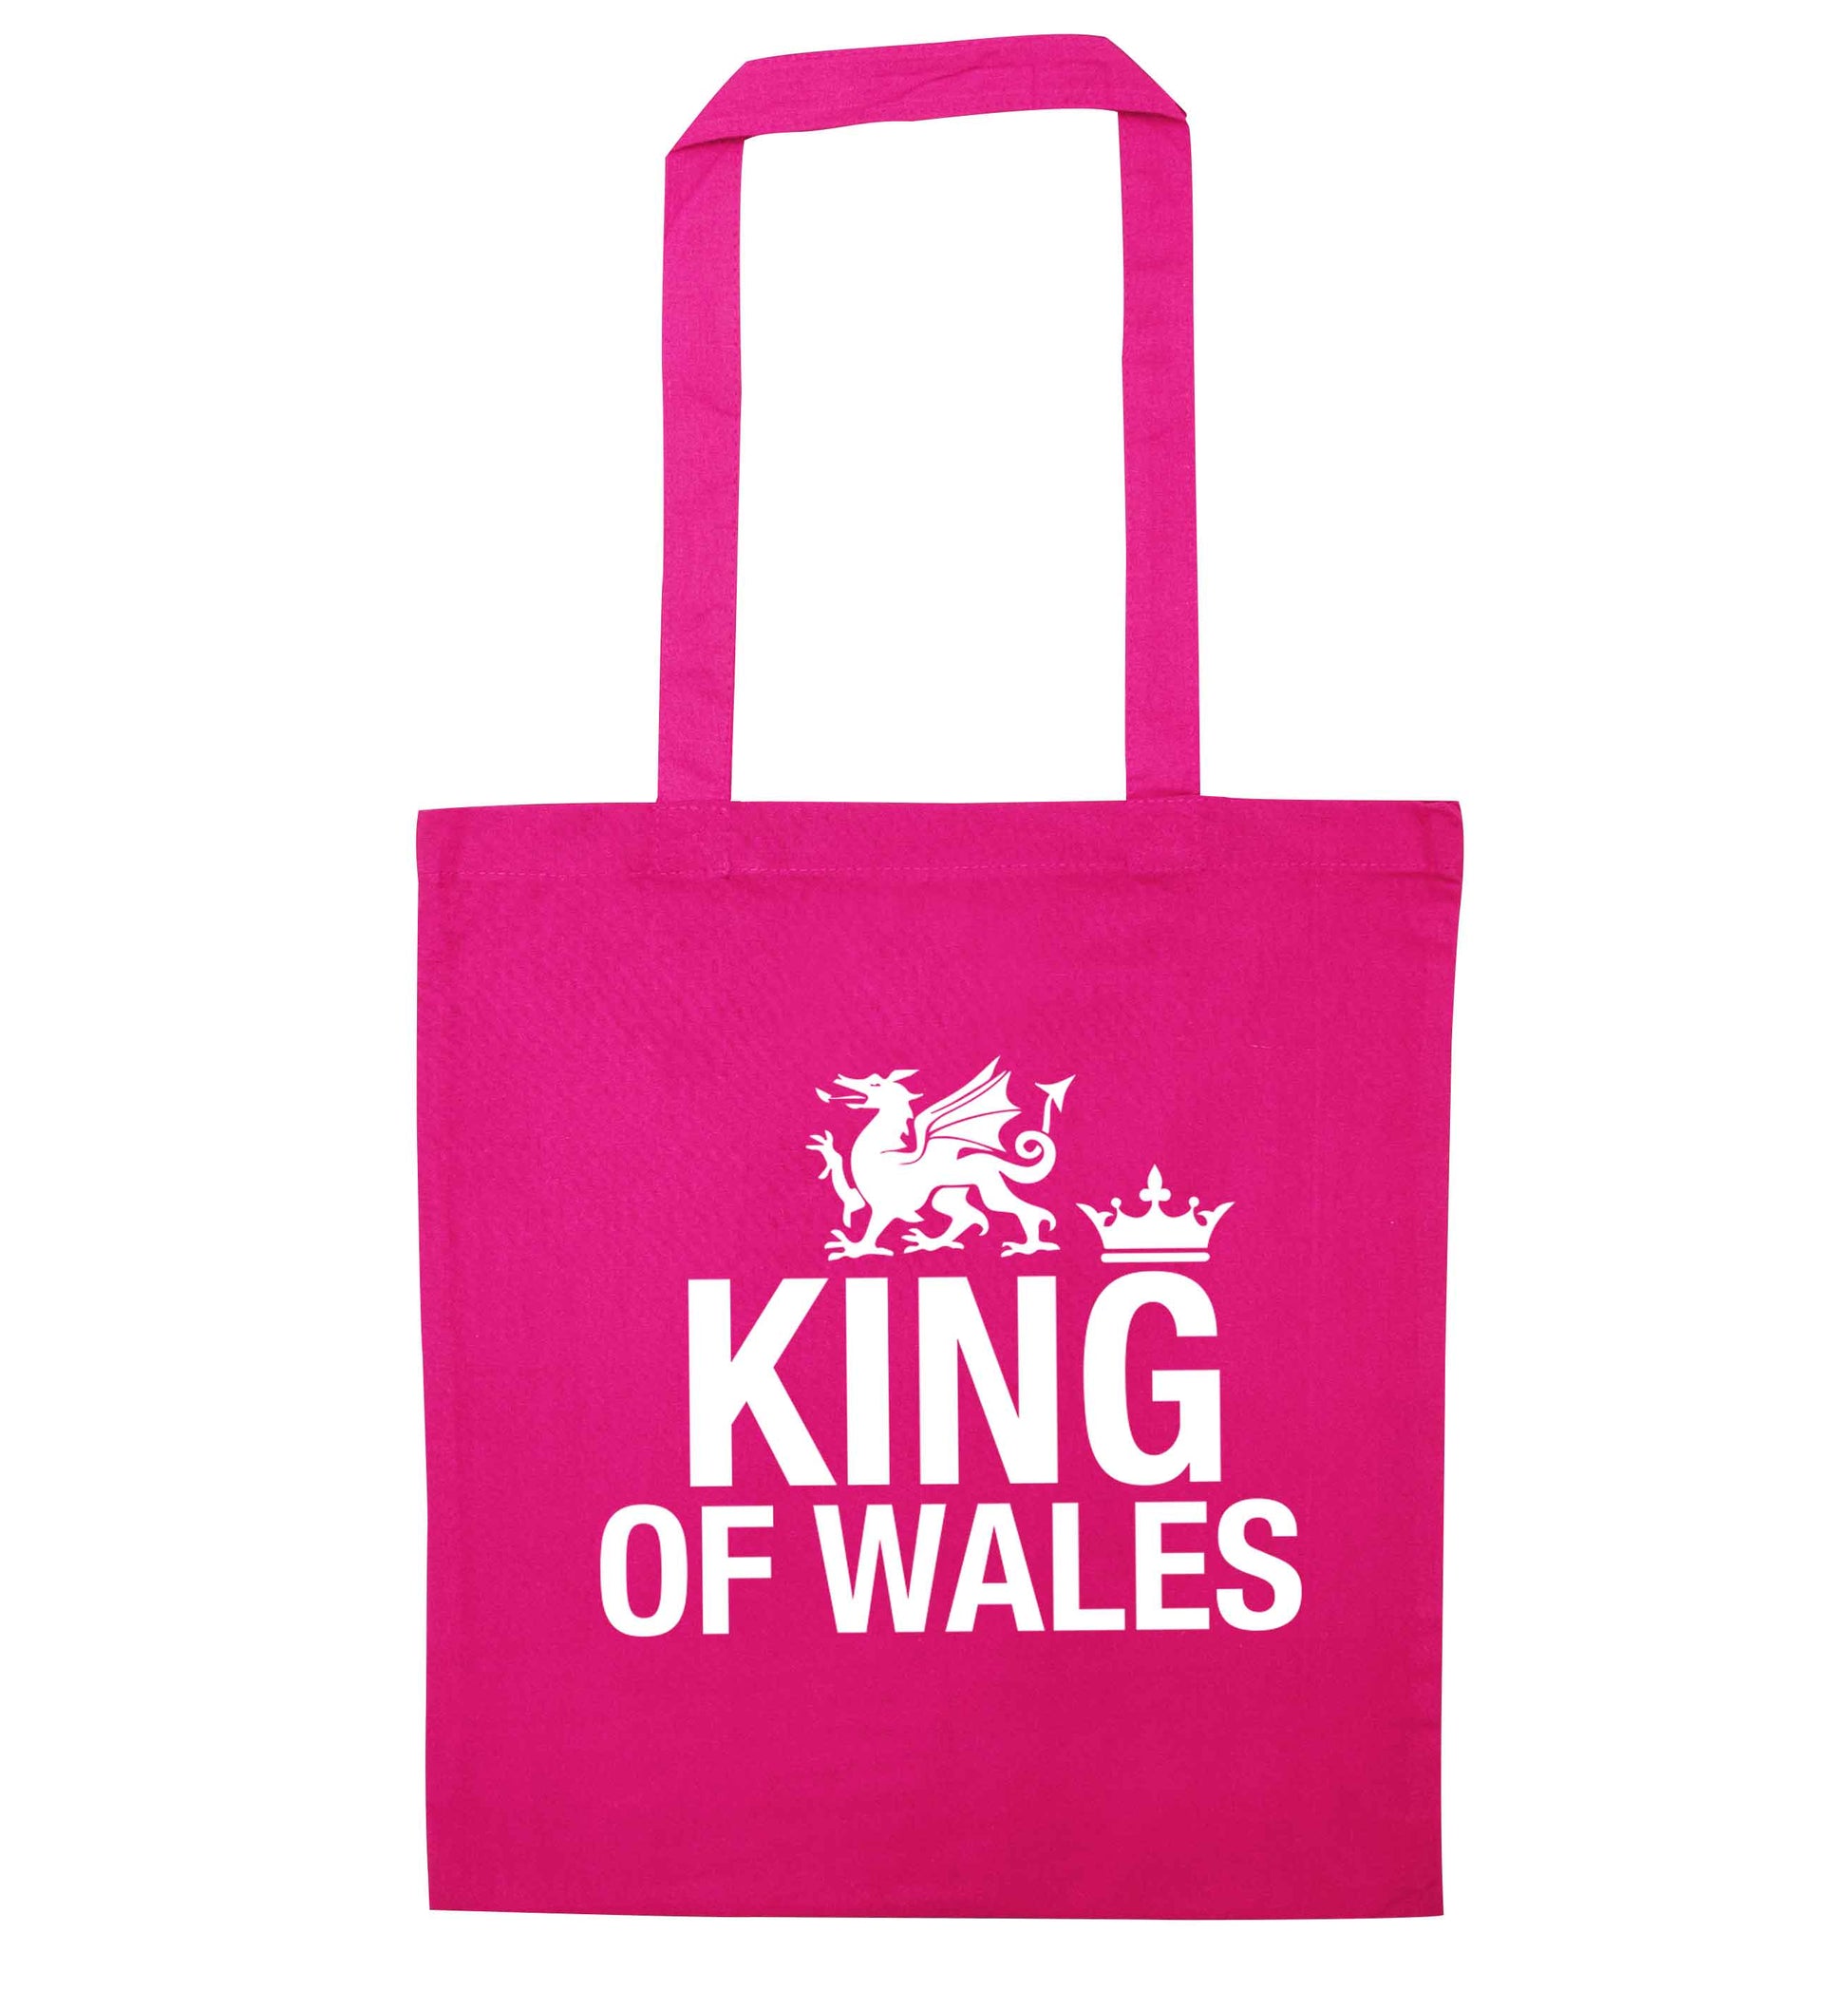 King of Wales pink tote bag